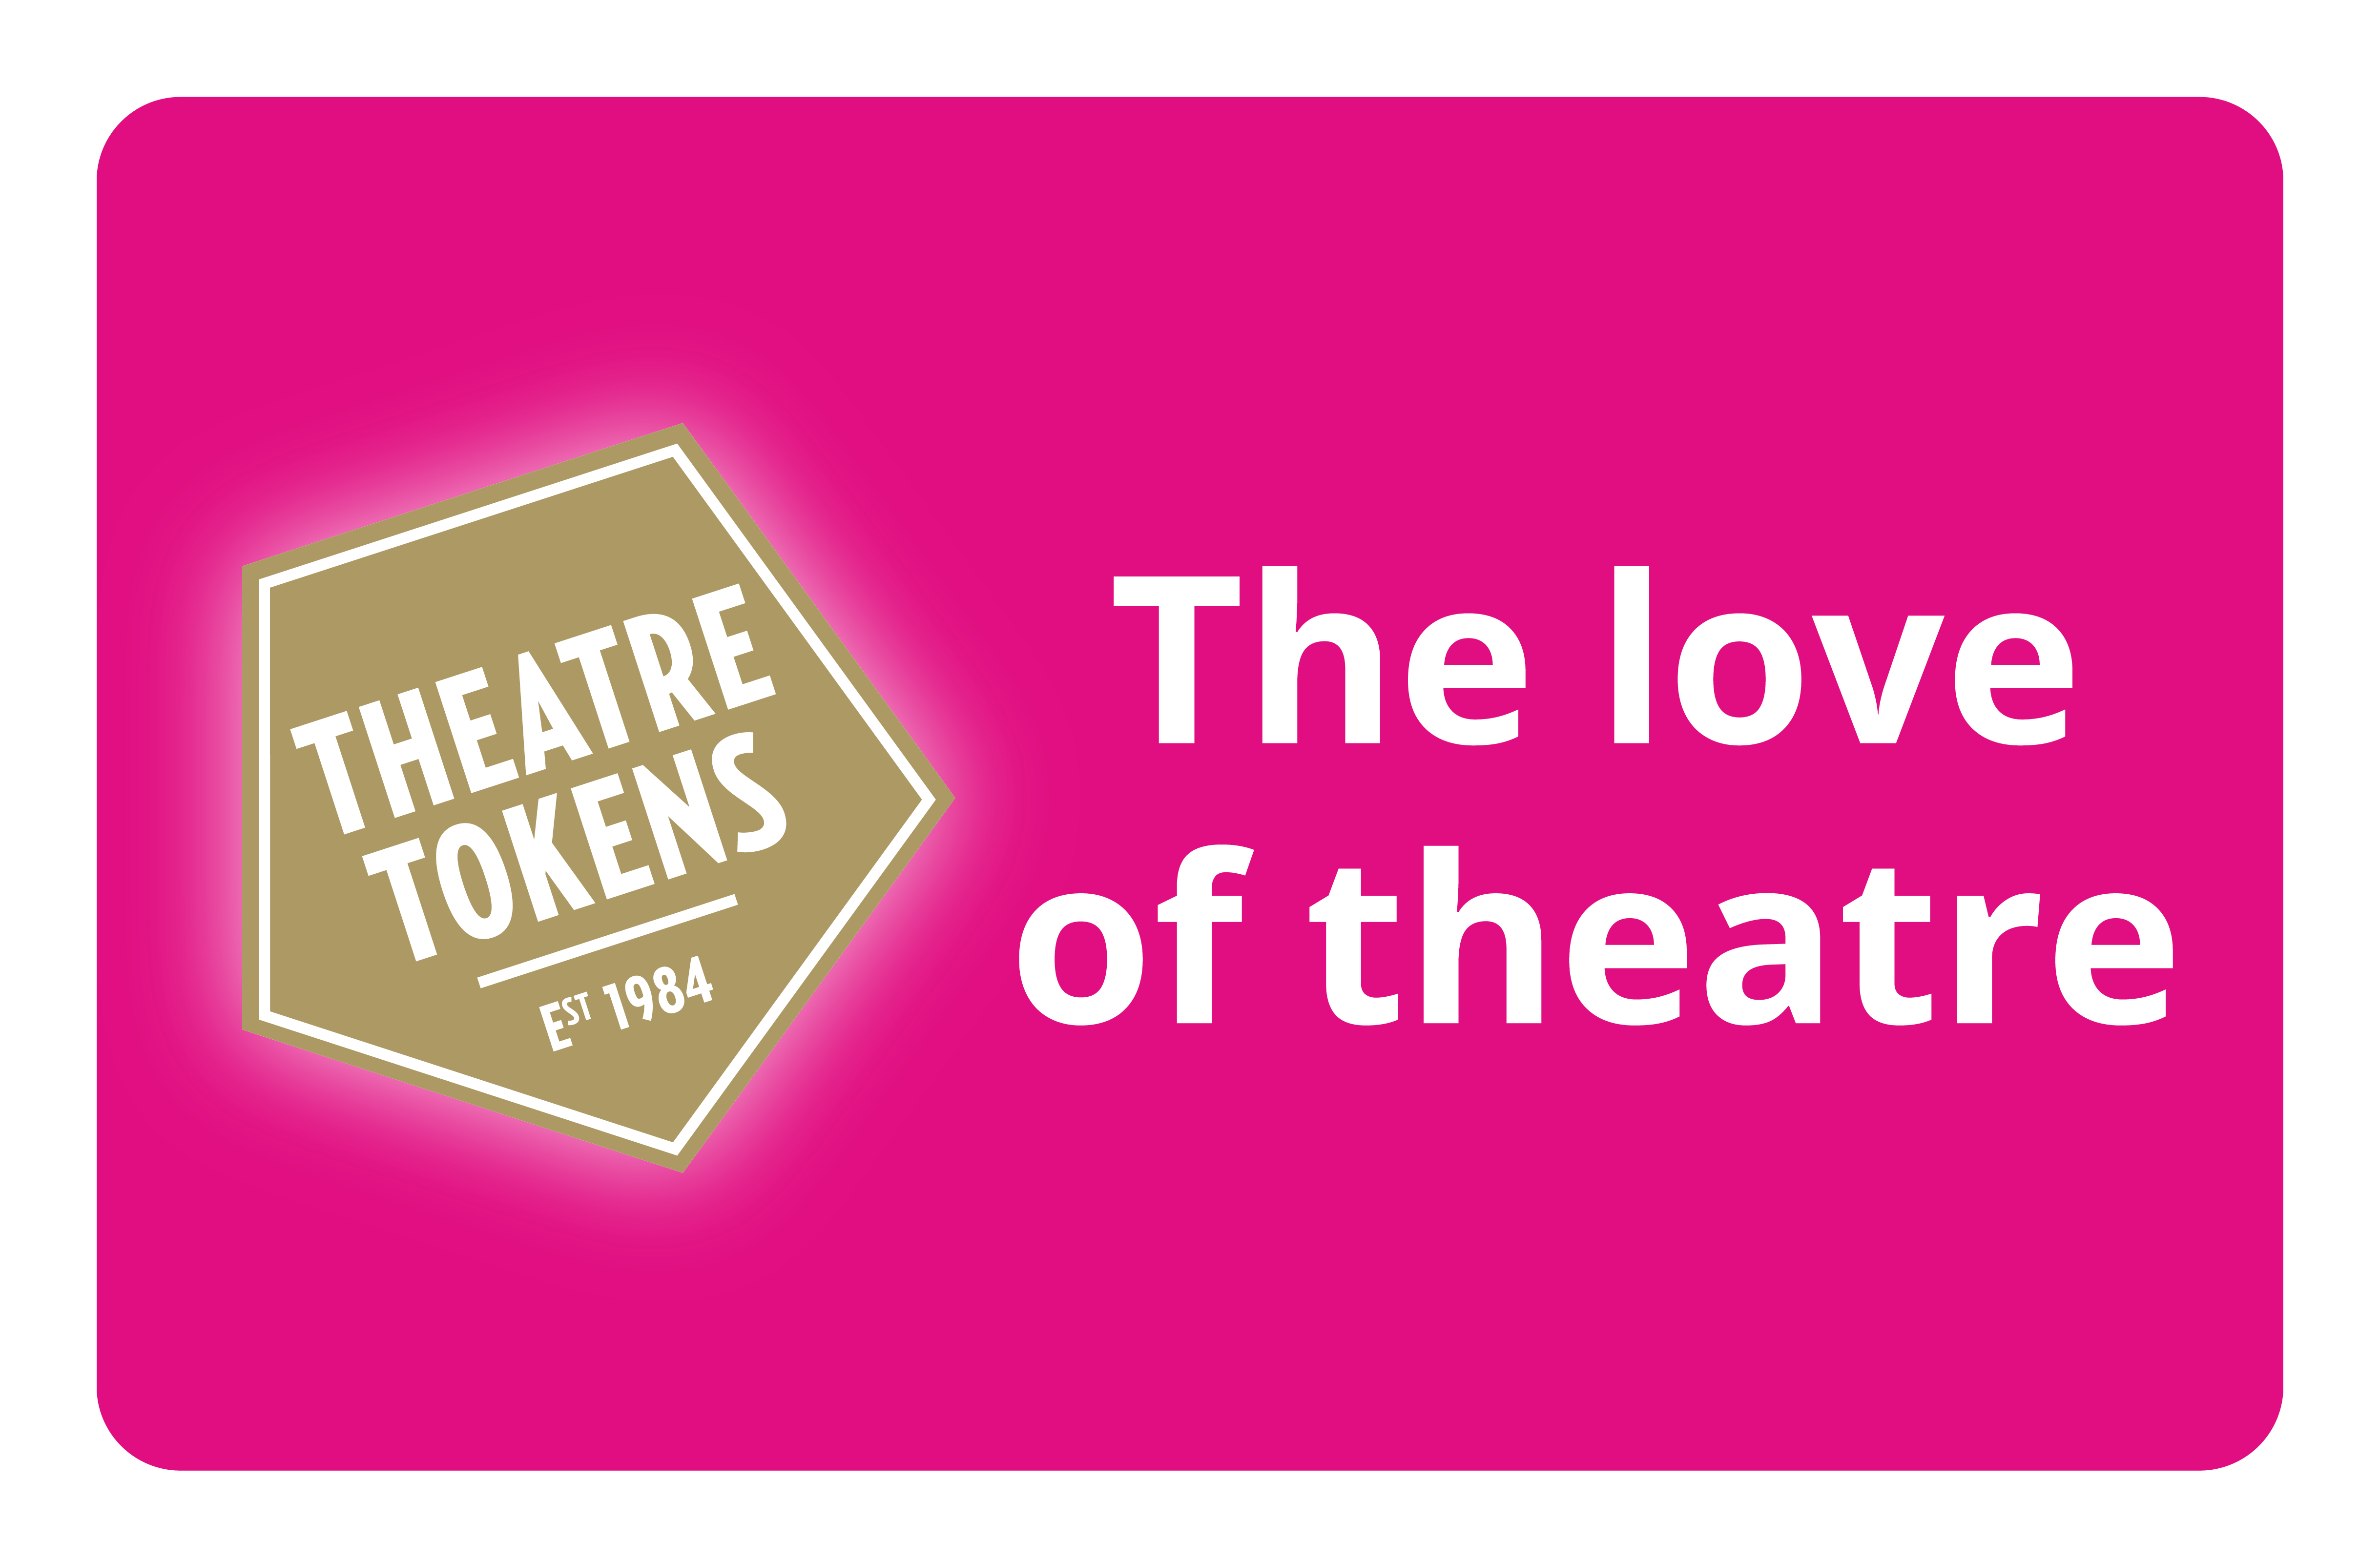 The Love of Theatre